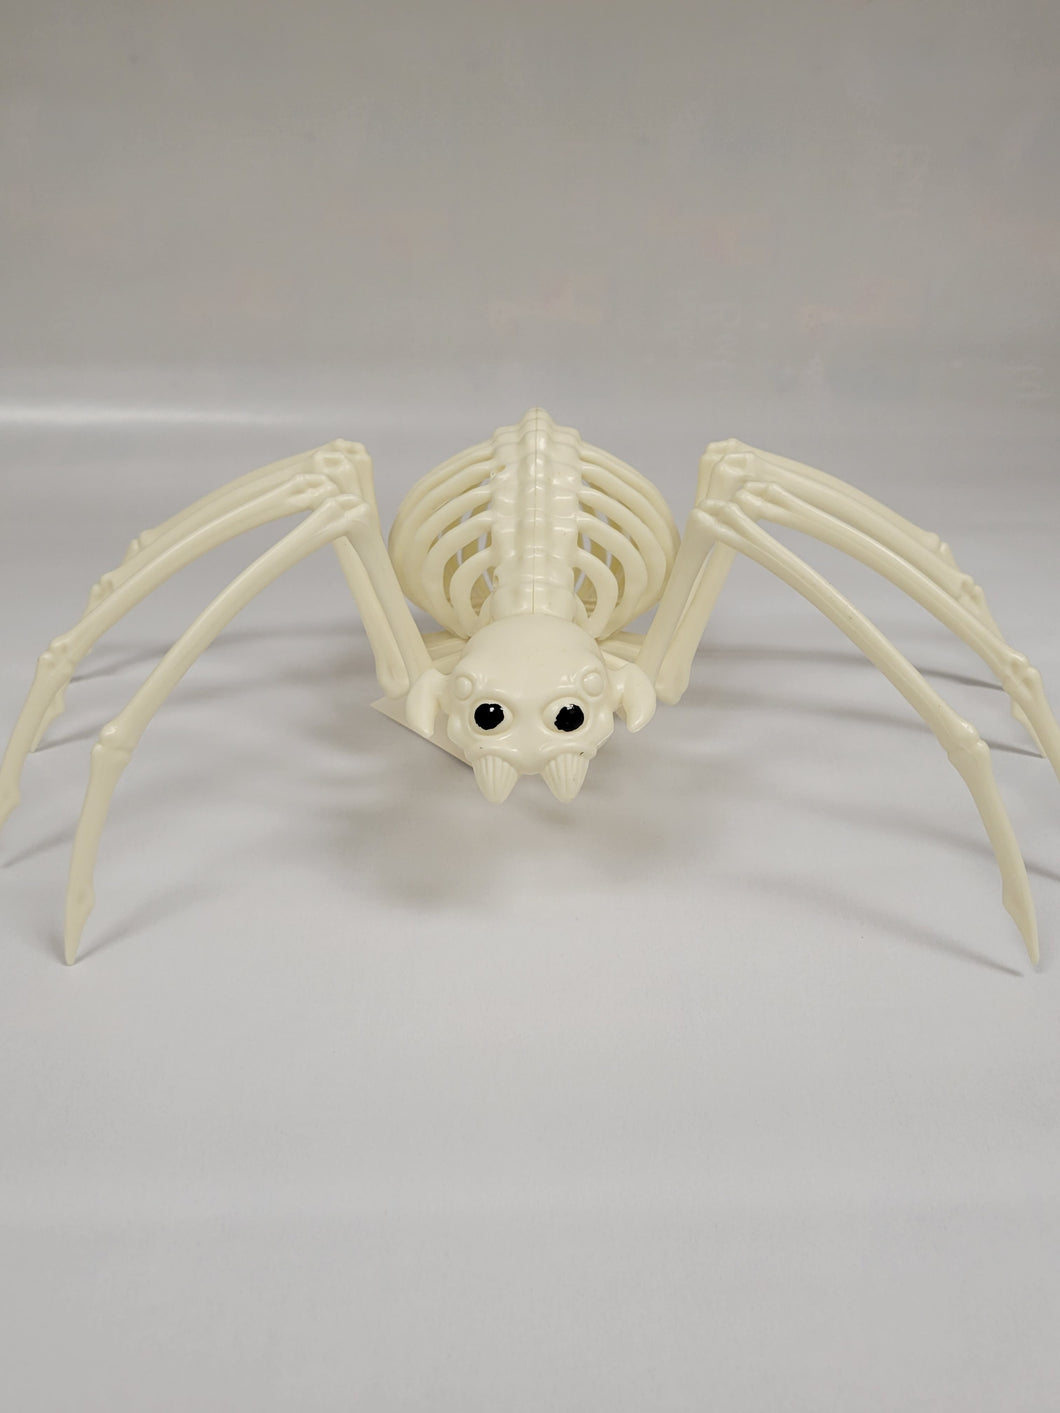 Jumbo Spider Skeleton